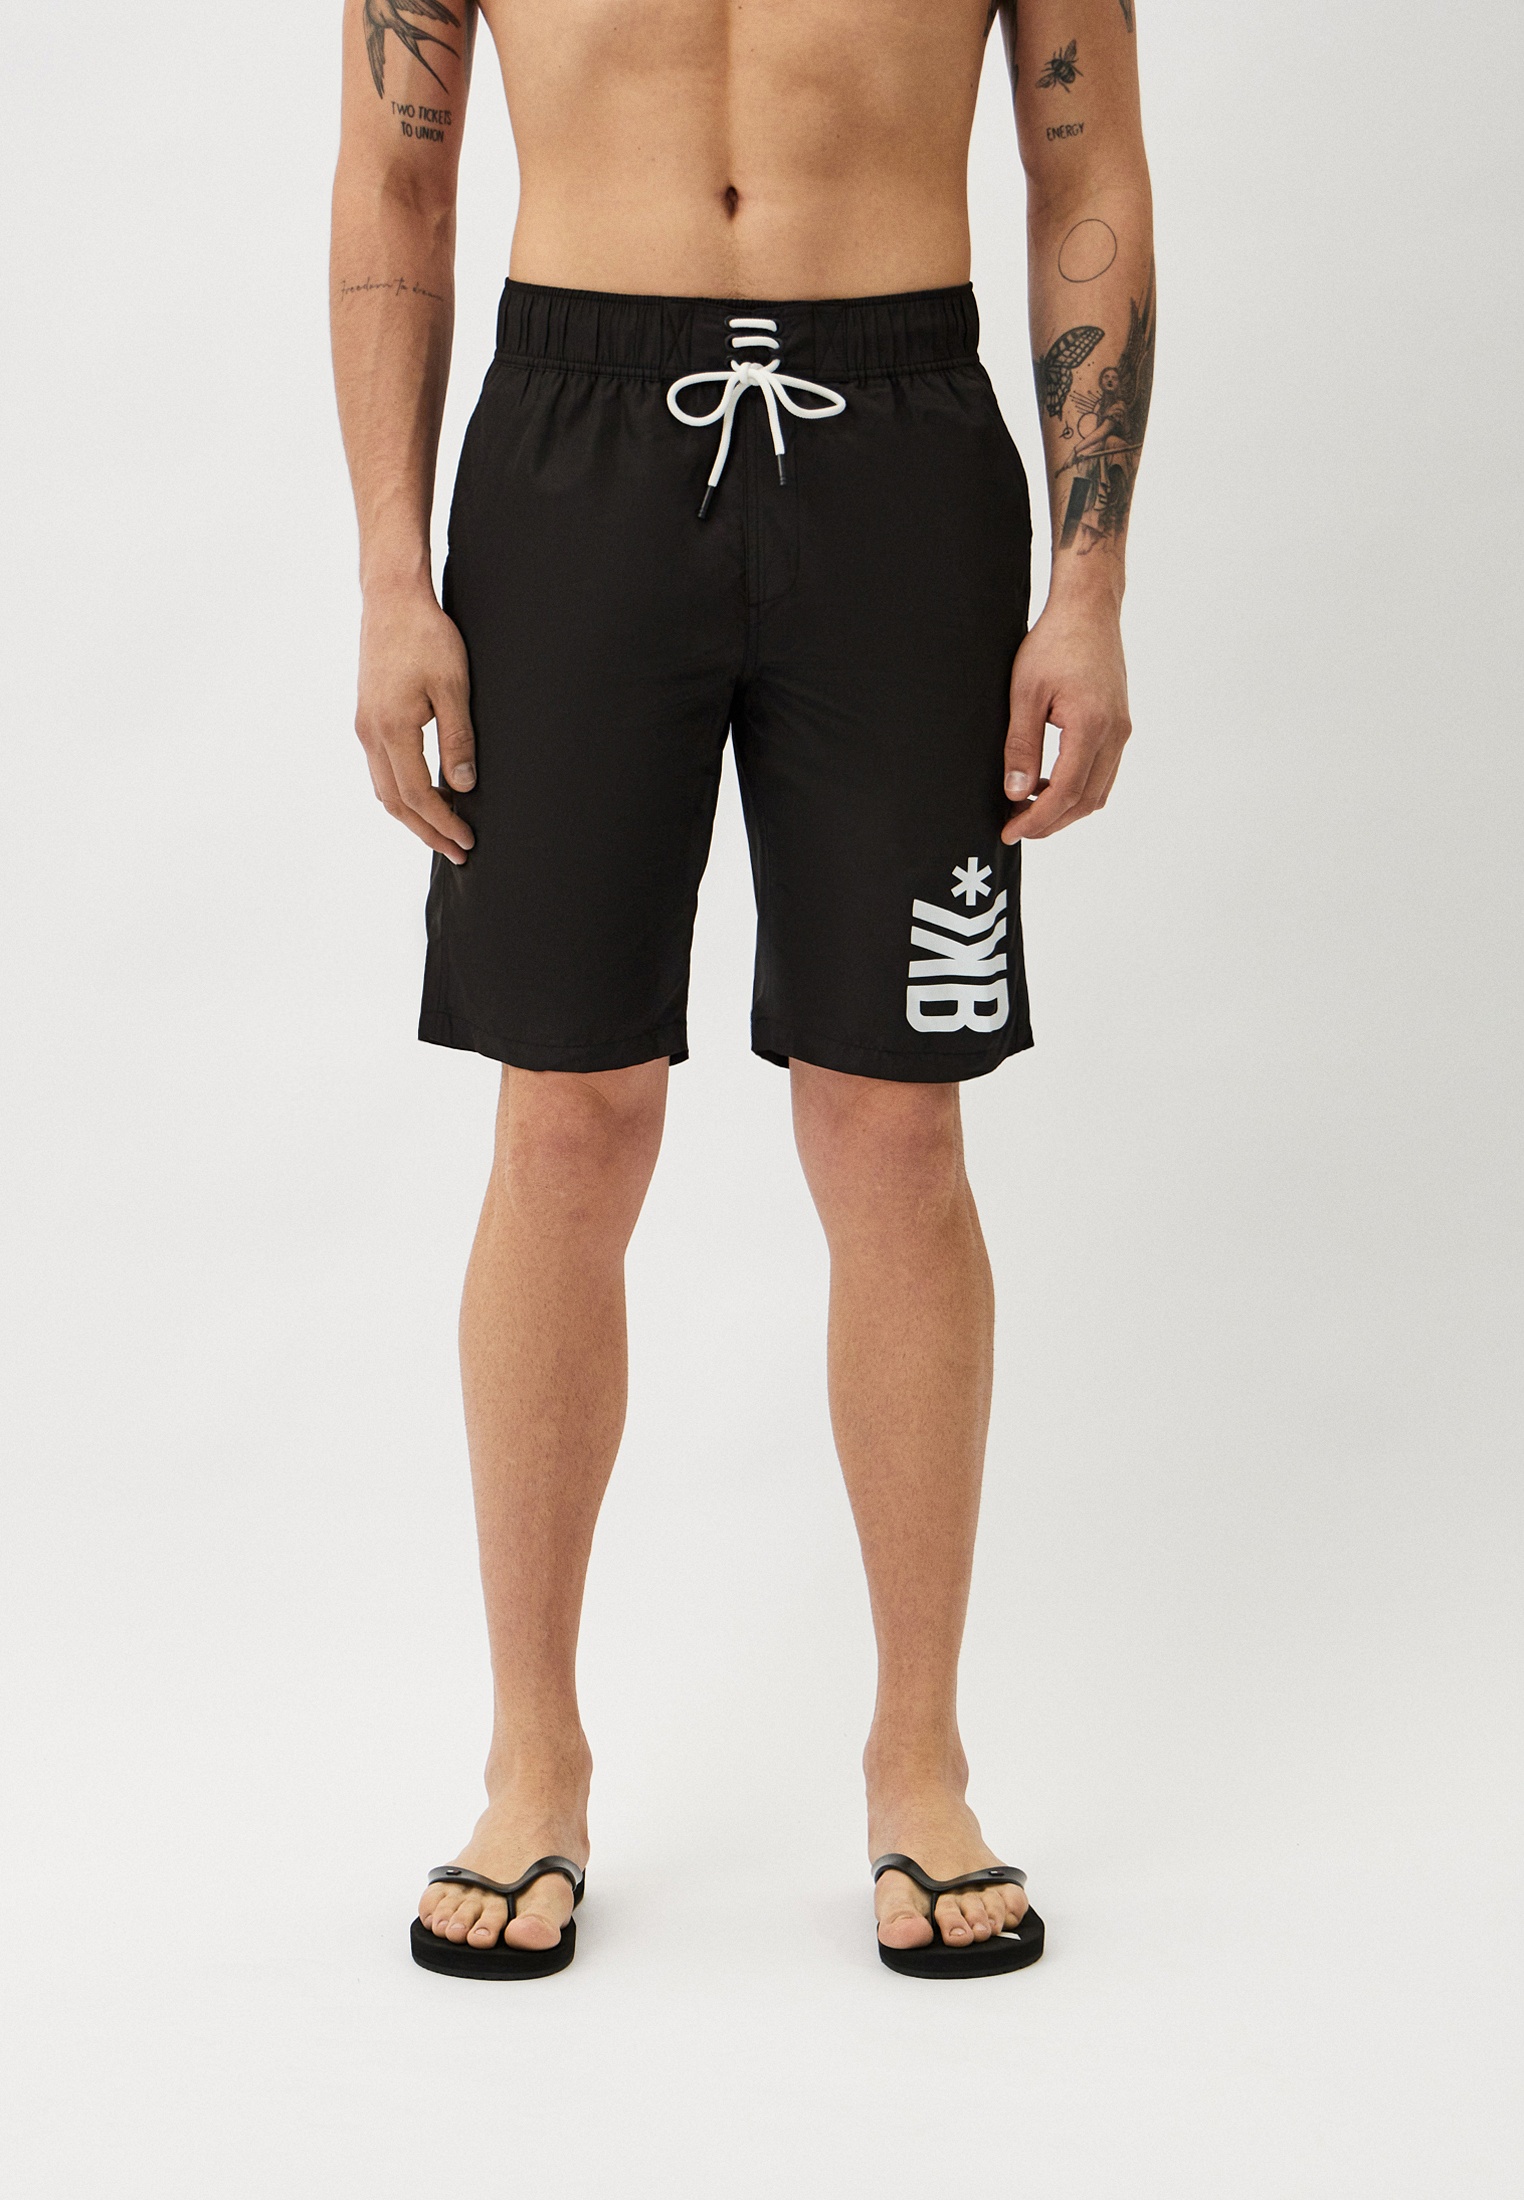 Мужские шорты для плавания Bikkembergs (Биккембергс) BKK3MBL01: изображение 1